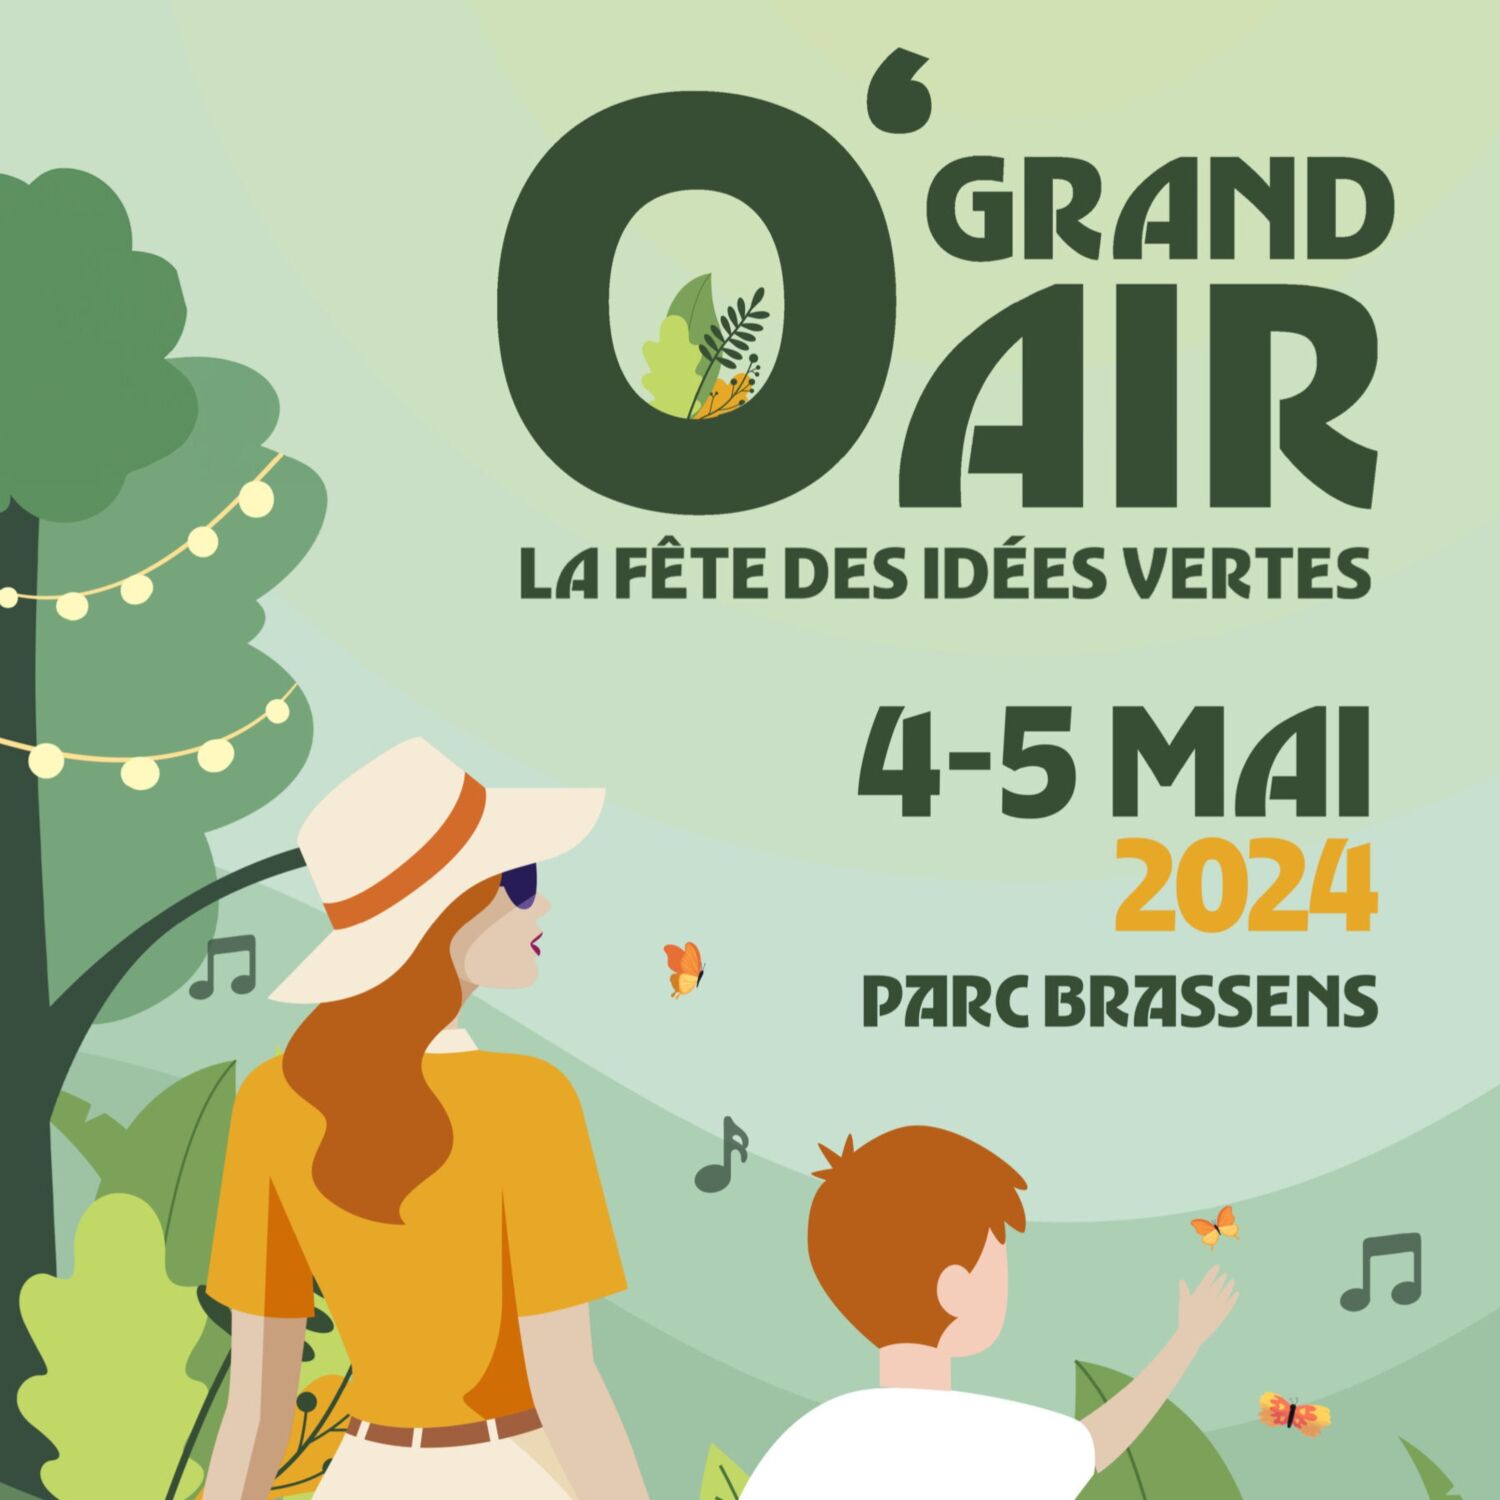 Ce week-end : "O' GRAND AIR" à Avrillé !